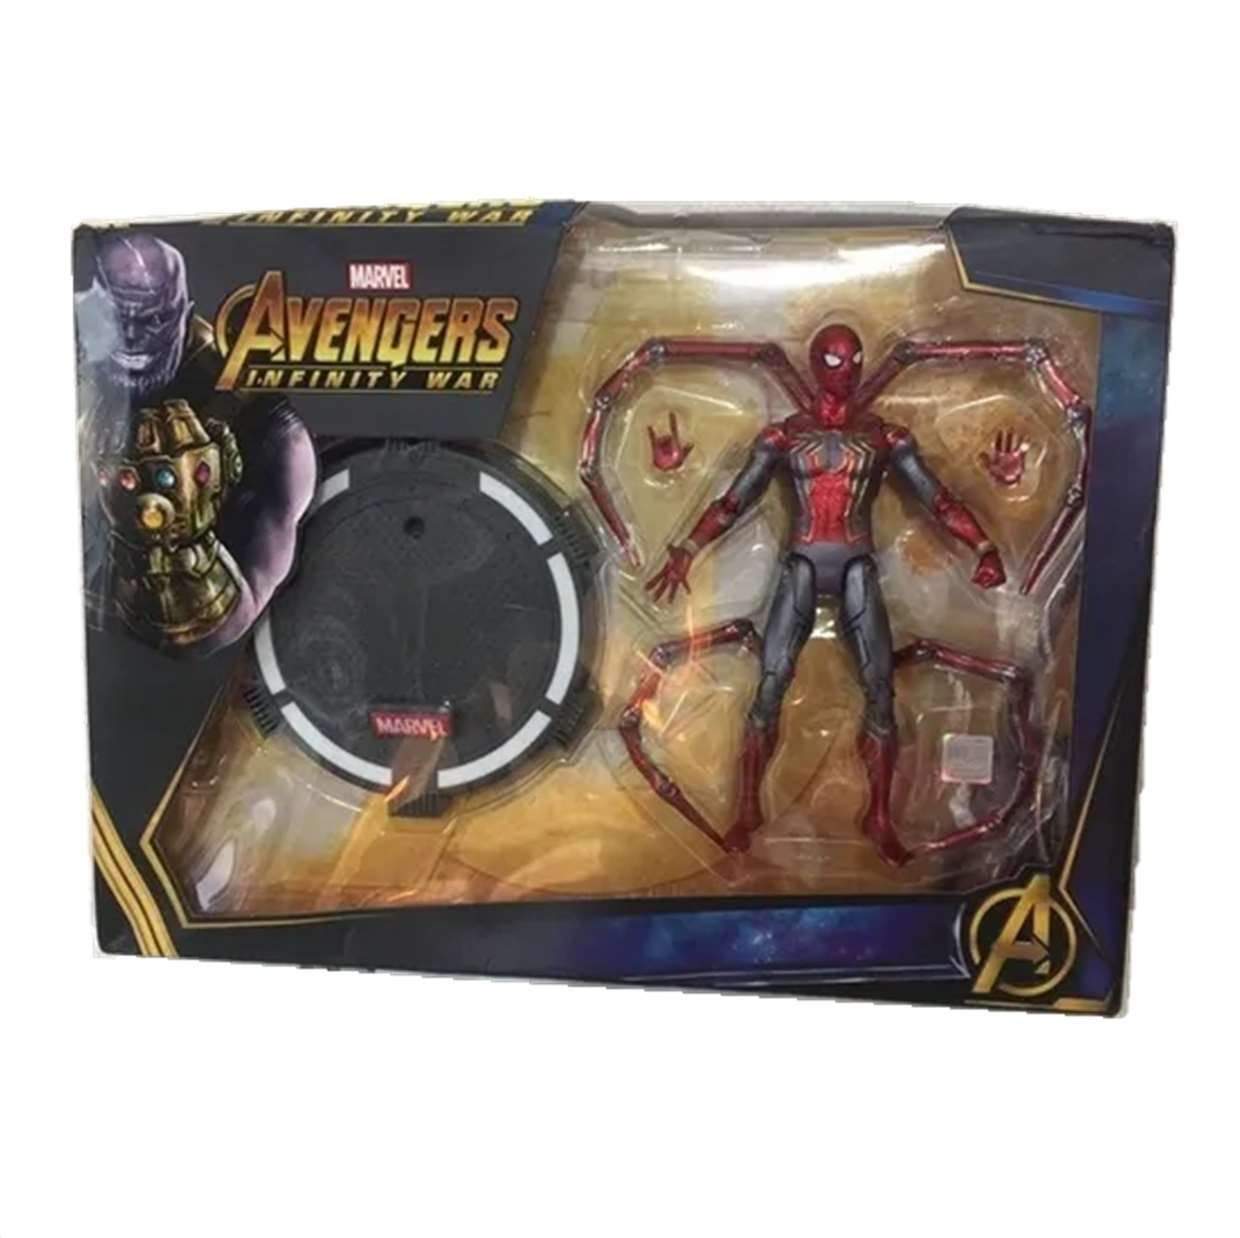 Iron Spider Figura Marvel Infinity War Con Base Led 